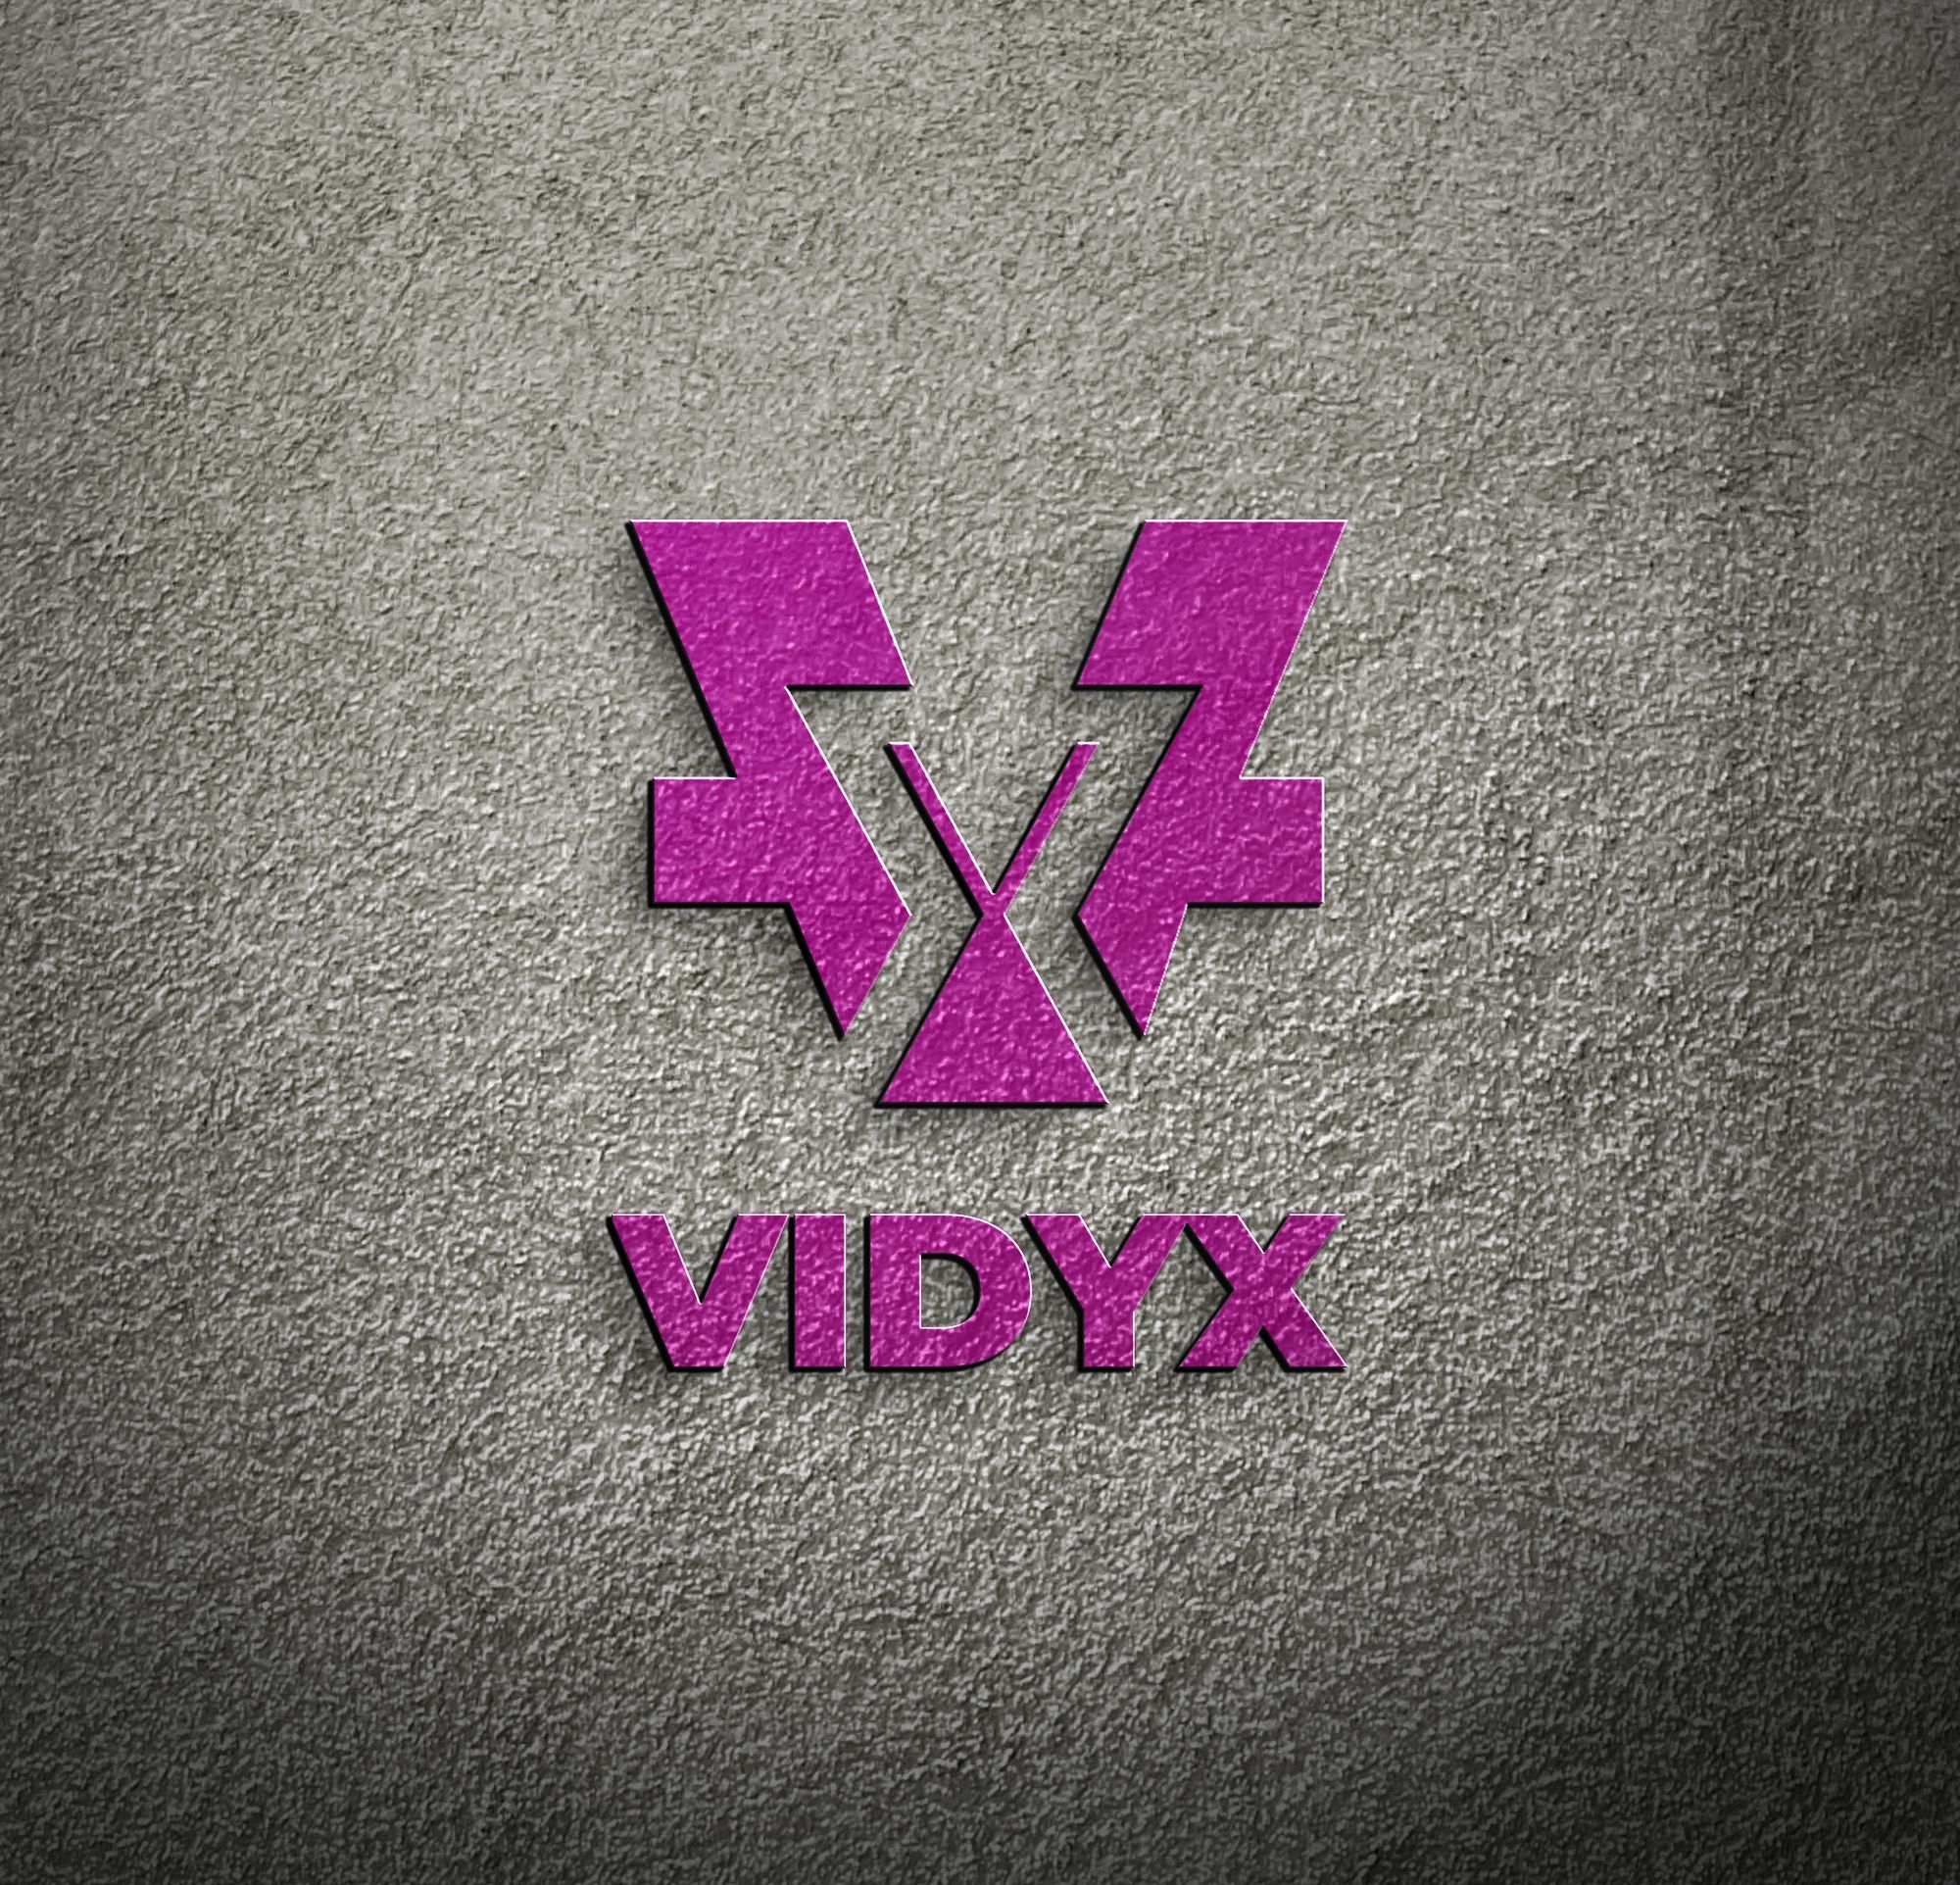 Next cryptocurrency to explode VIDYX